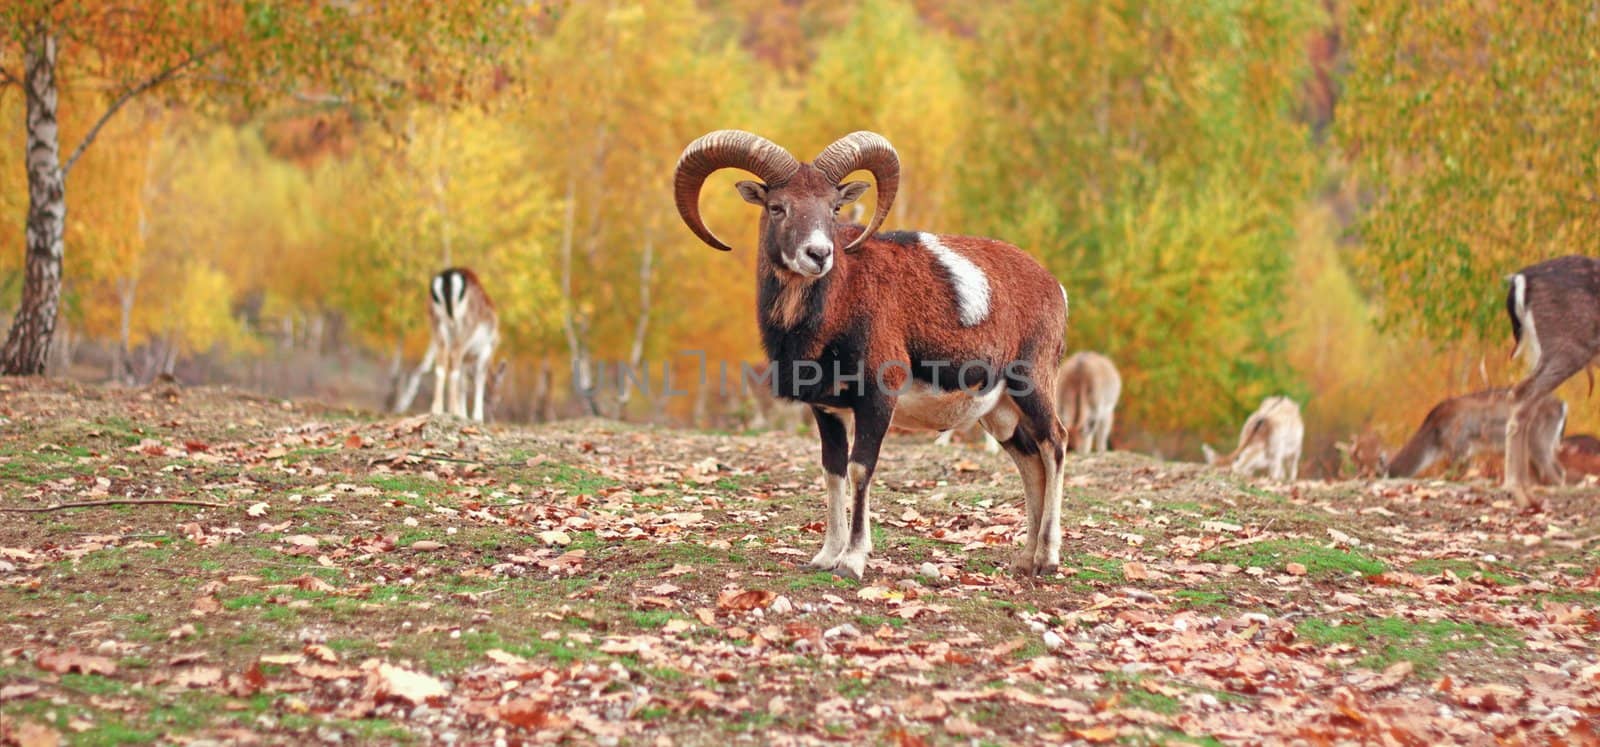 mouflon ram in autumn setting at an animal park 